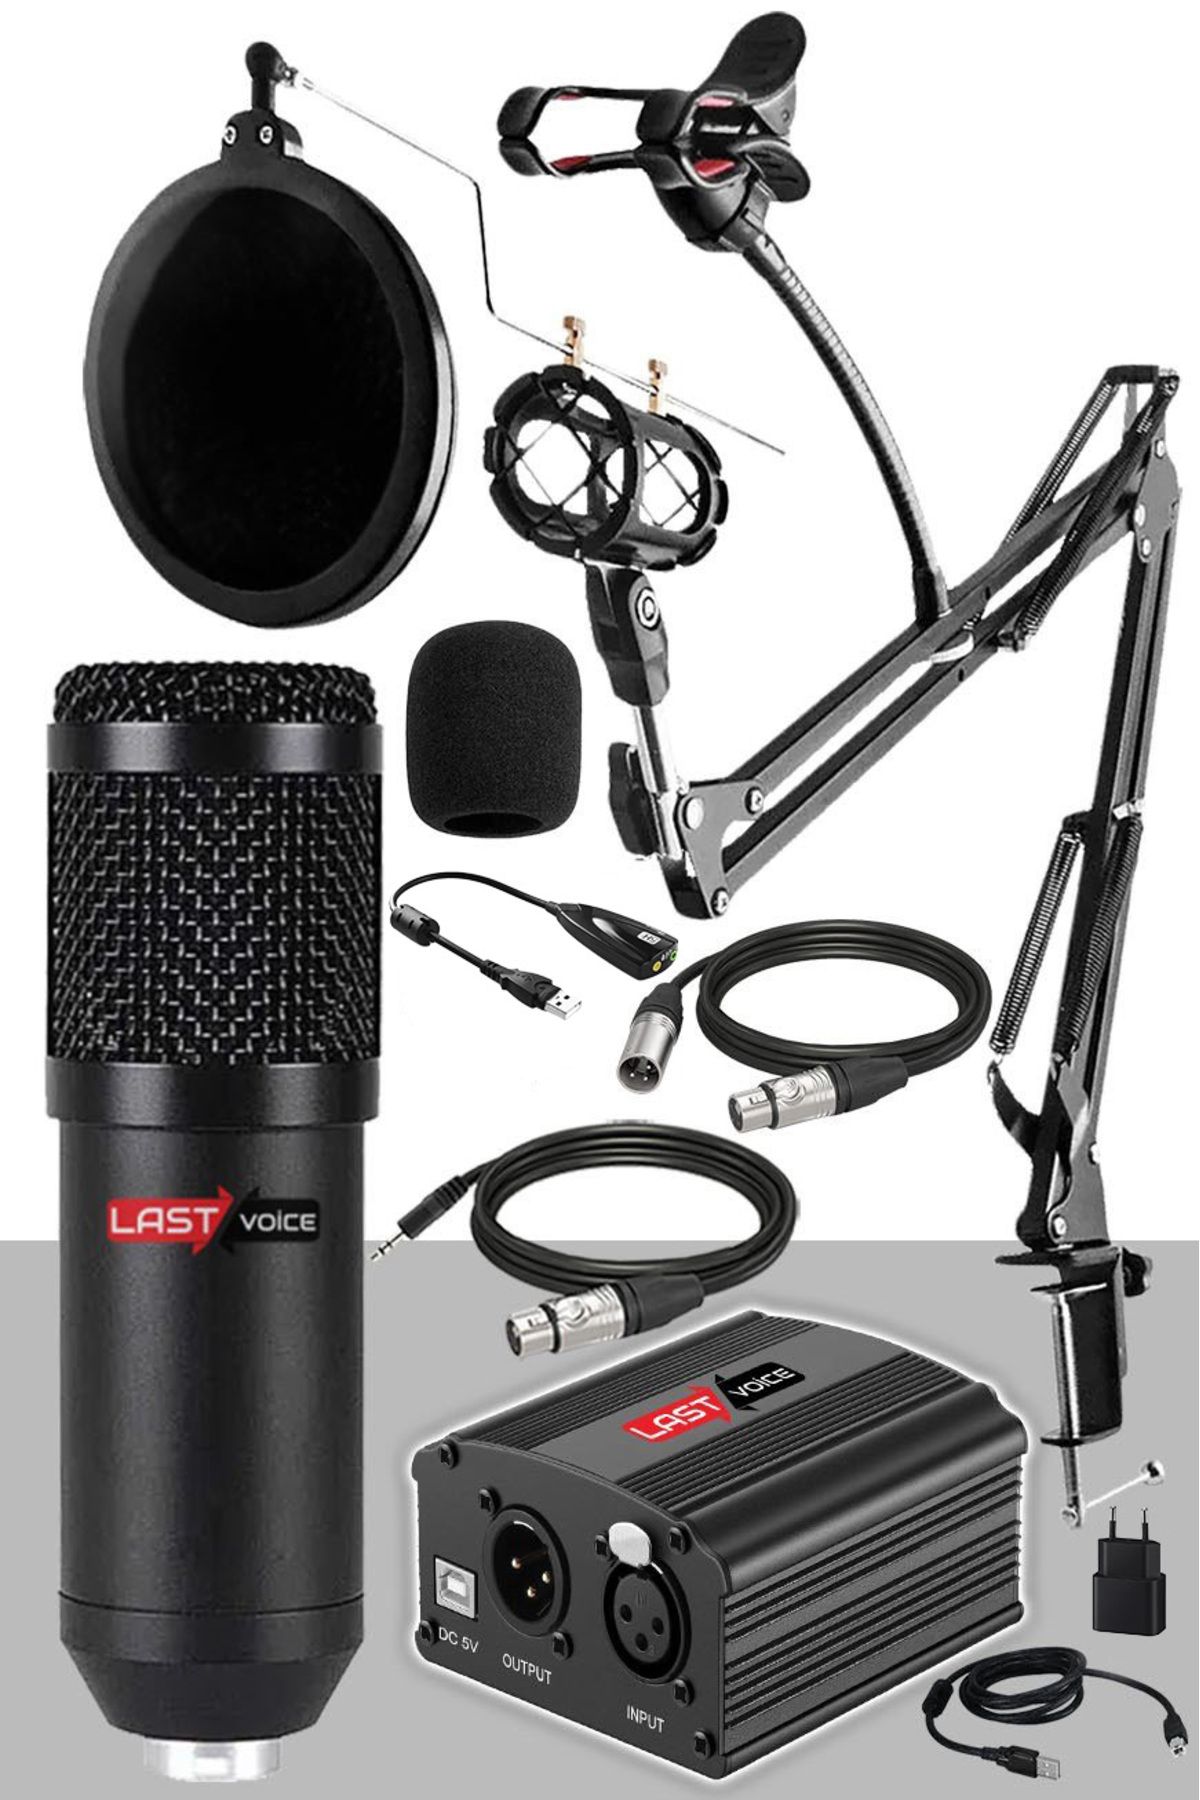 Lastvoice Home Paket Bm800 Mikrofon Set-01 Stand Phantom Power